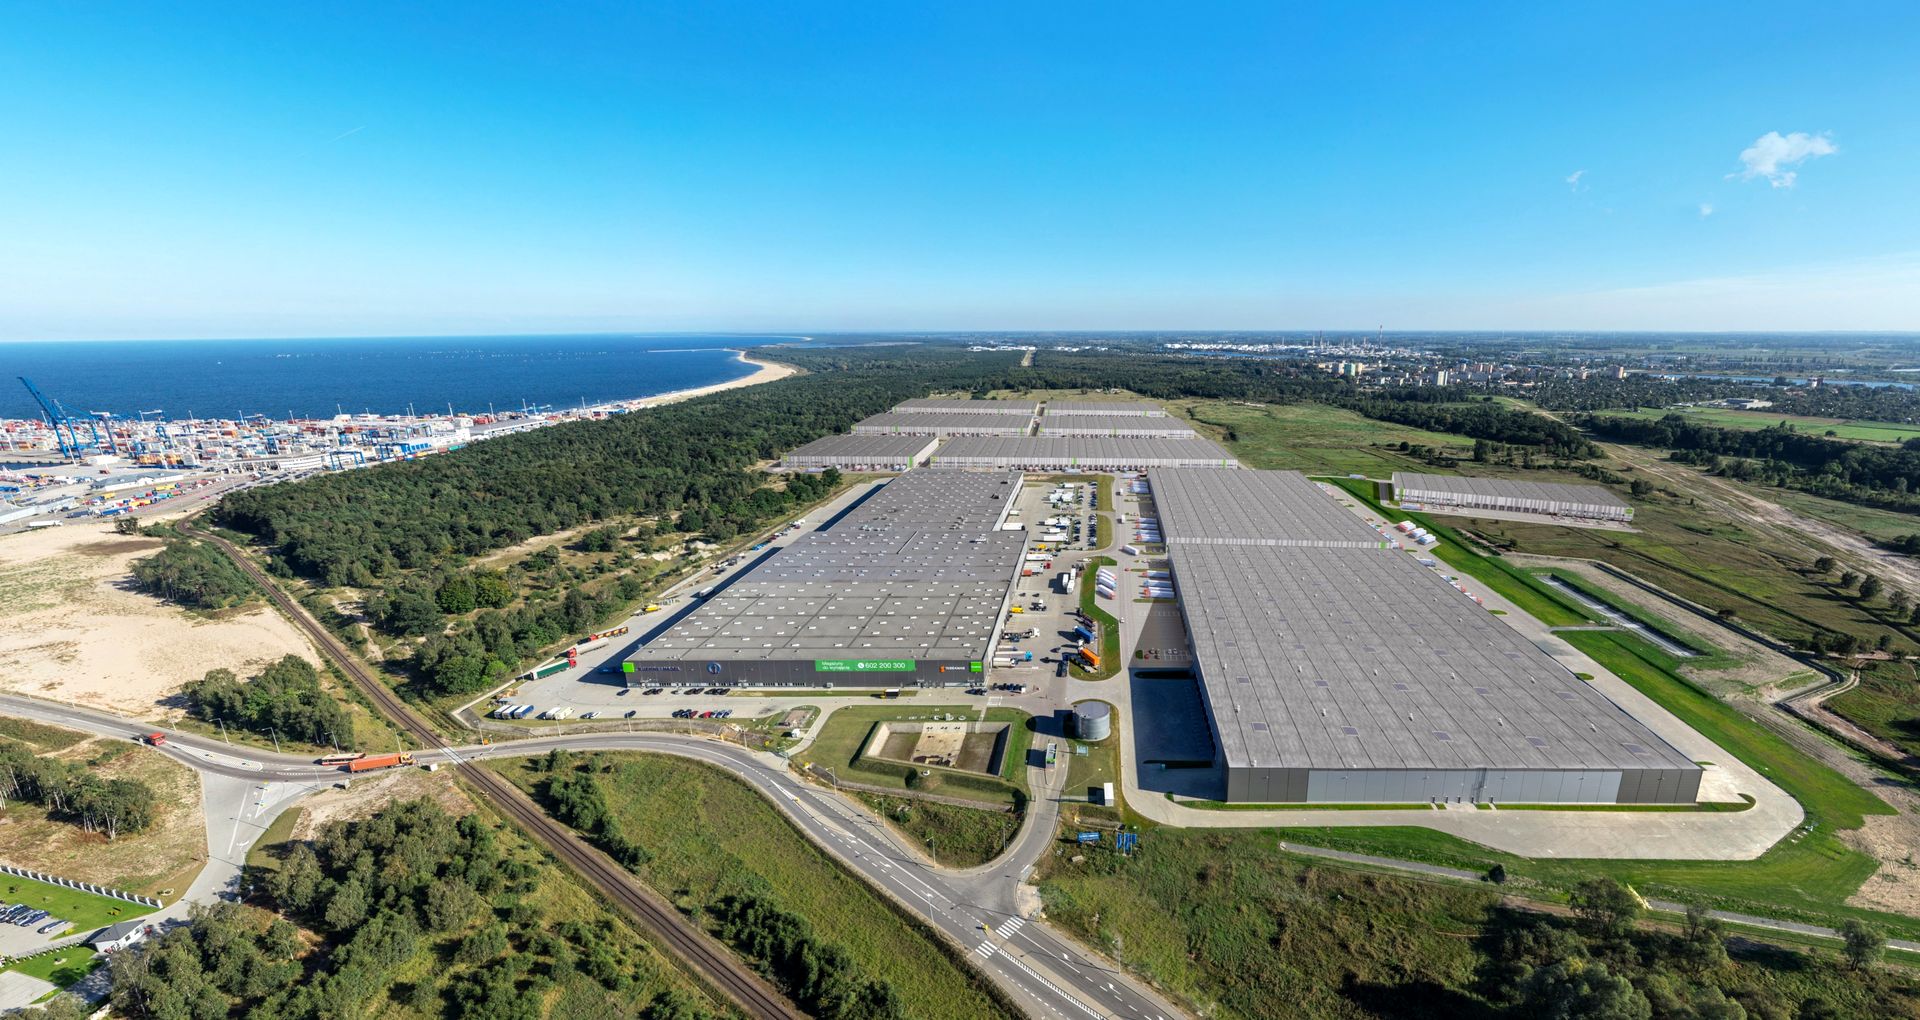 Yusen Logistics enters PLC in Gdańsk